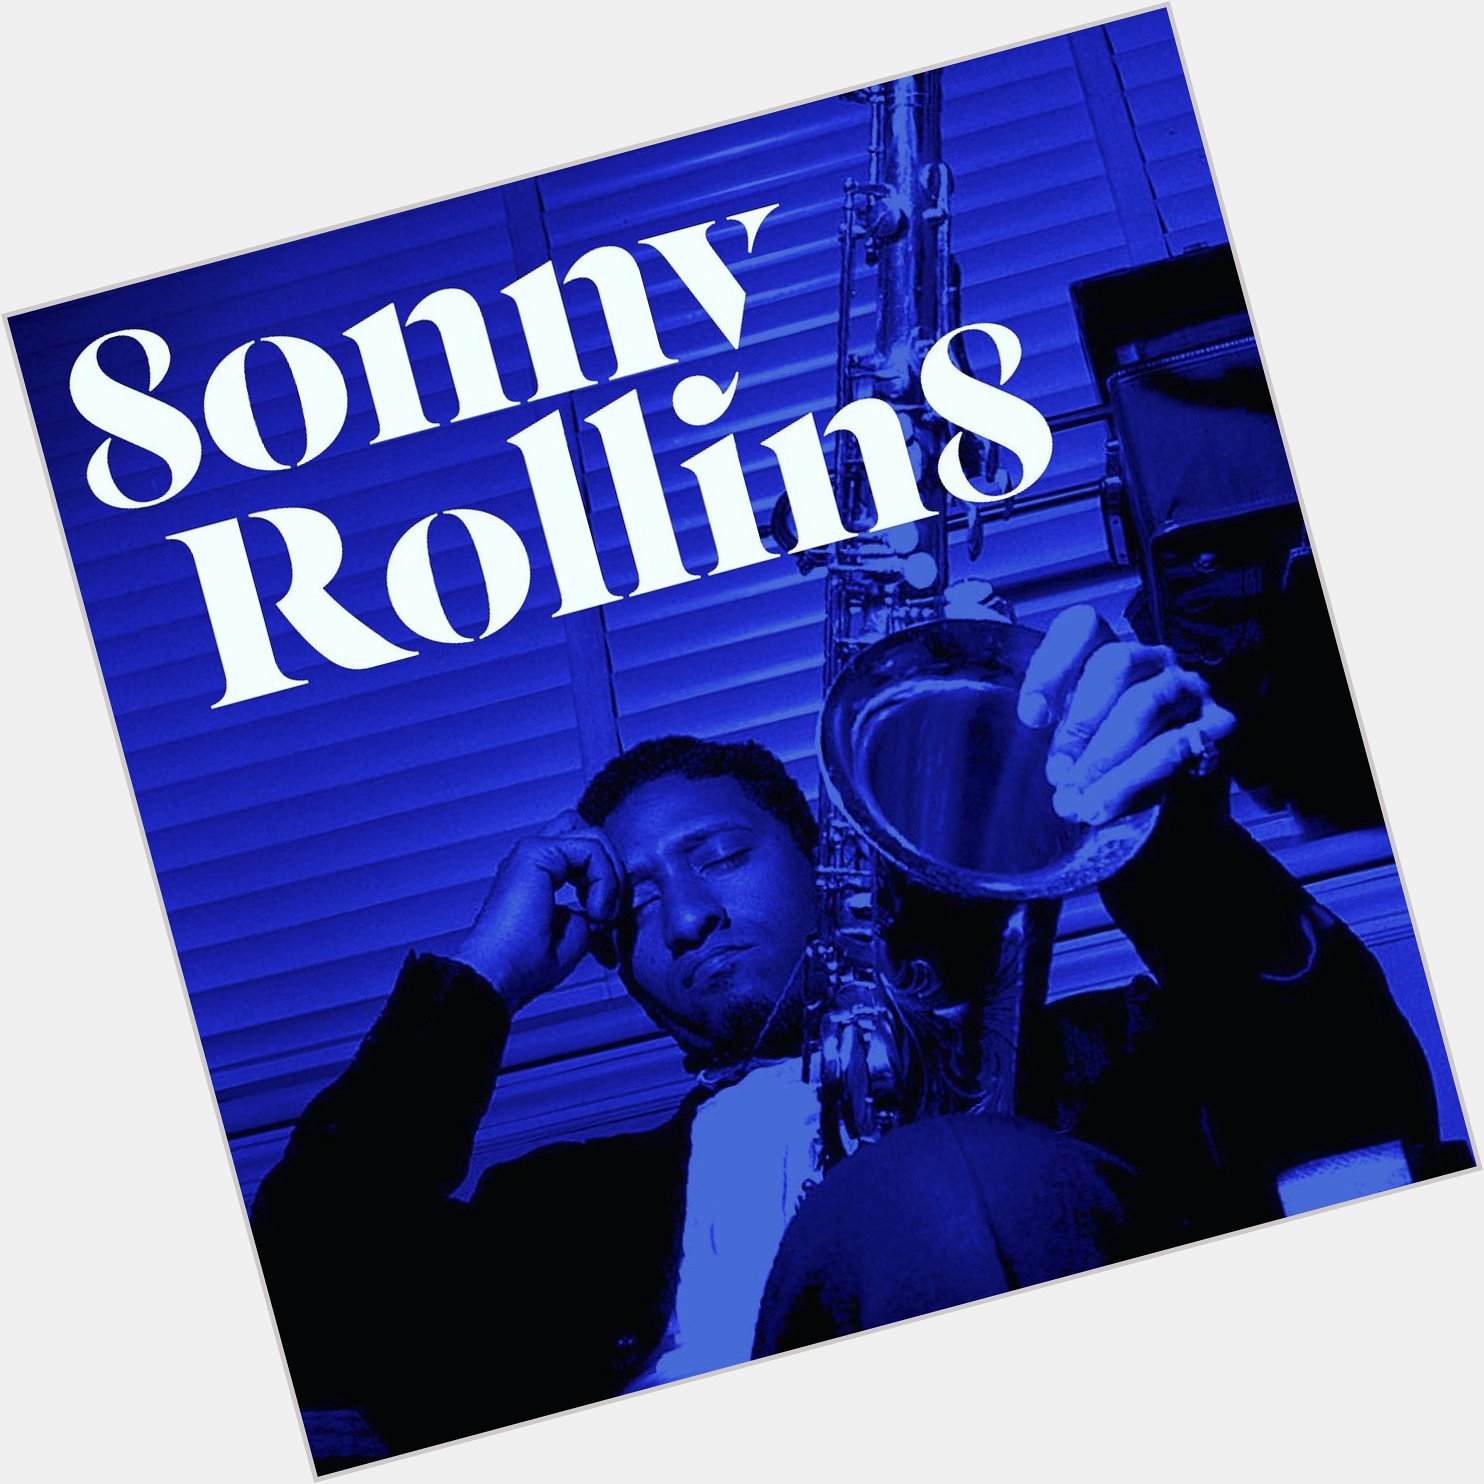 Happy 88th Birthday Sonny Rollins.    